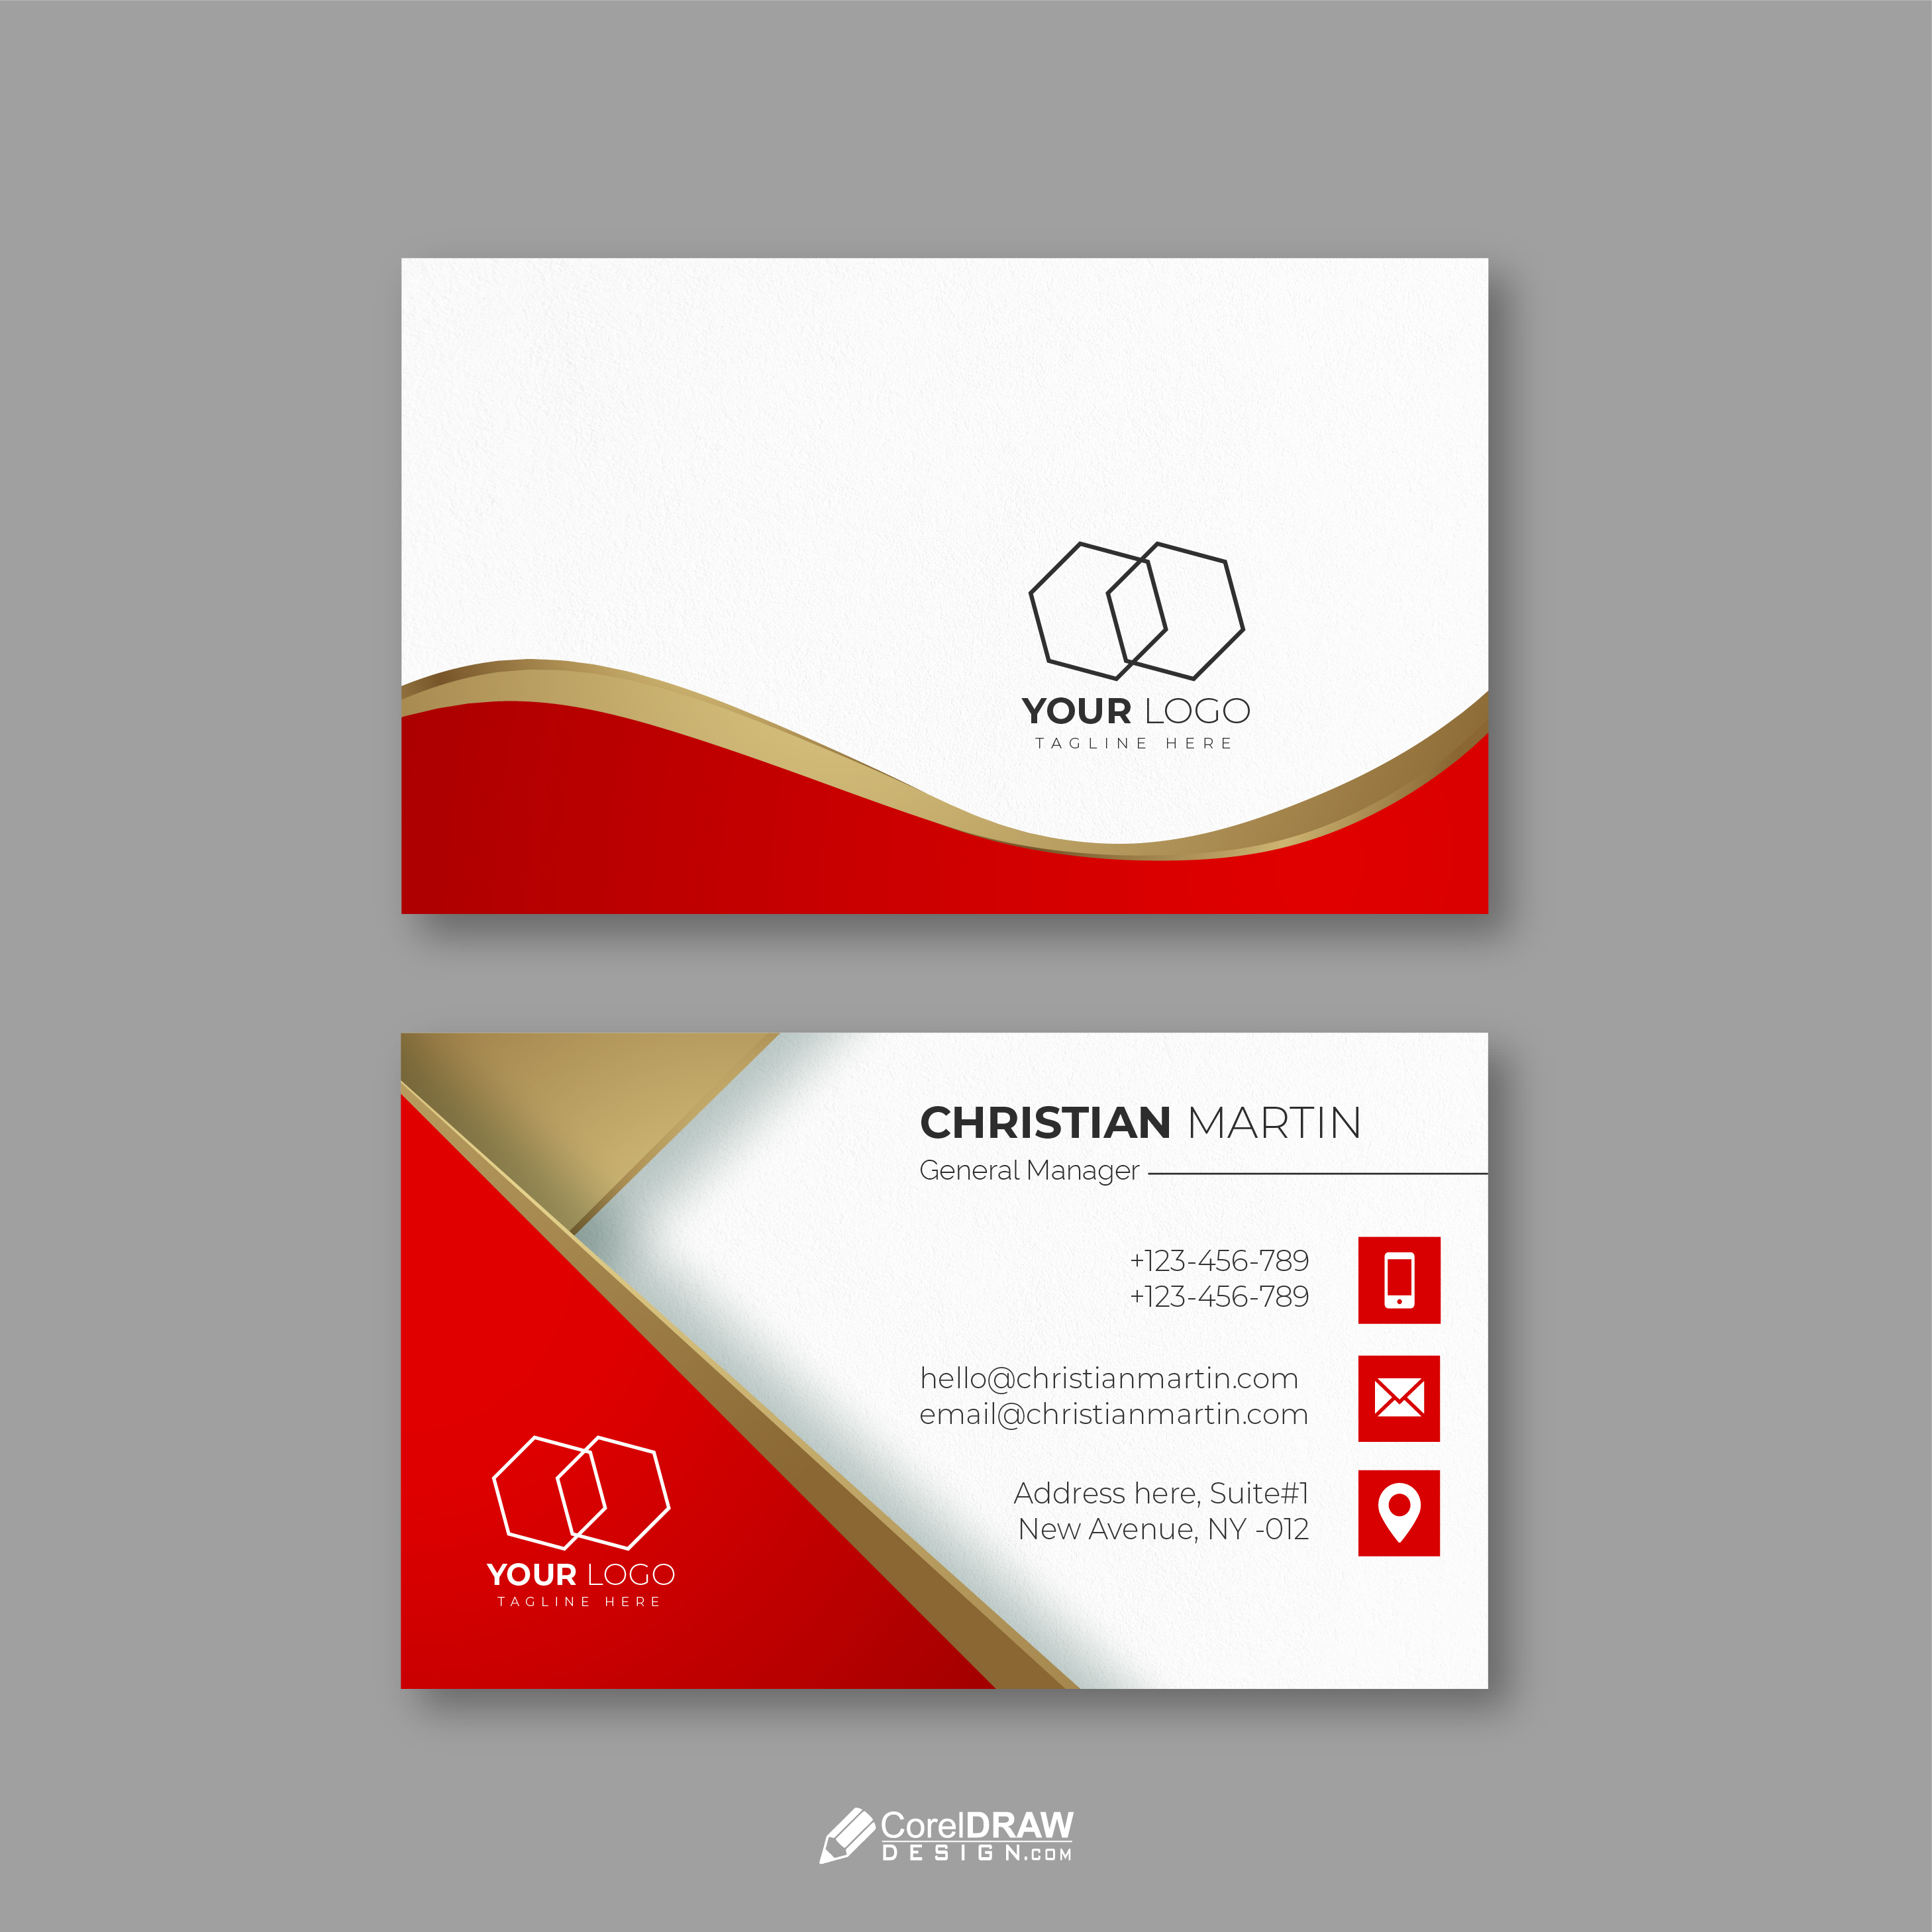 Corporate Elegant Professional Business Card